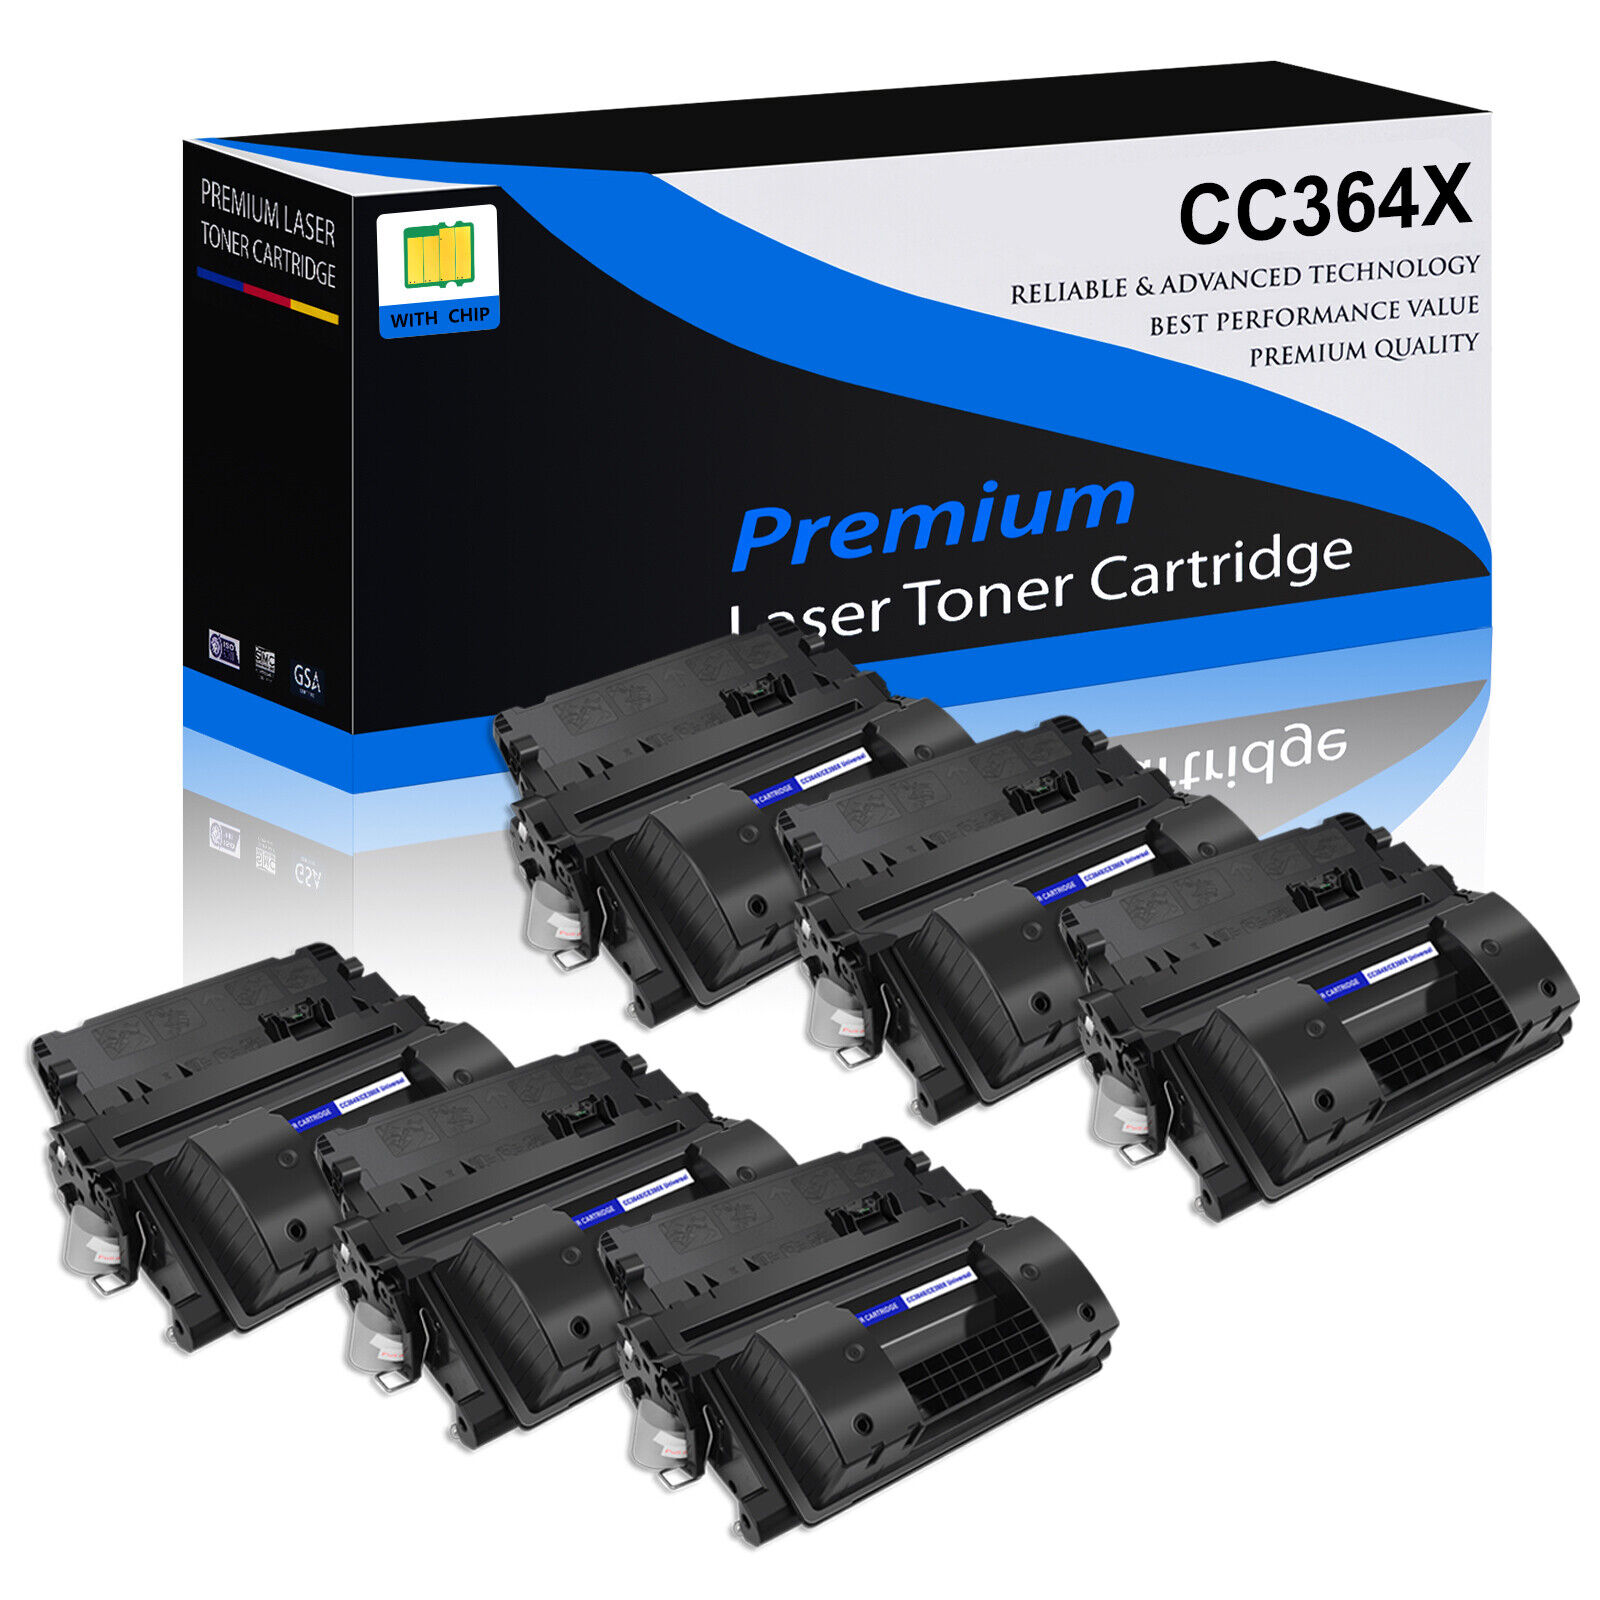 6PK CC364X Toner Cartridge Compatible with HP LaserJet P4515n P4015tn P4015x INK